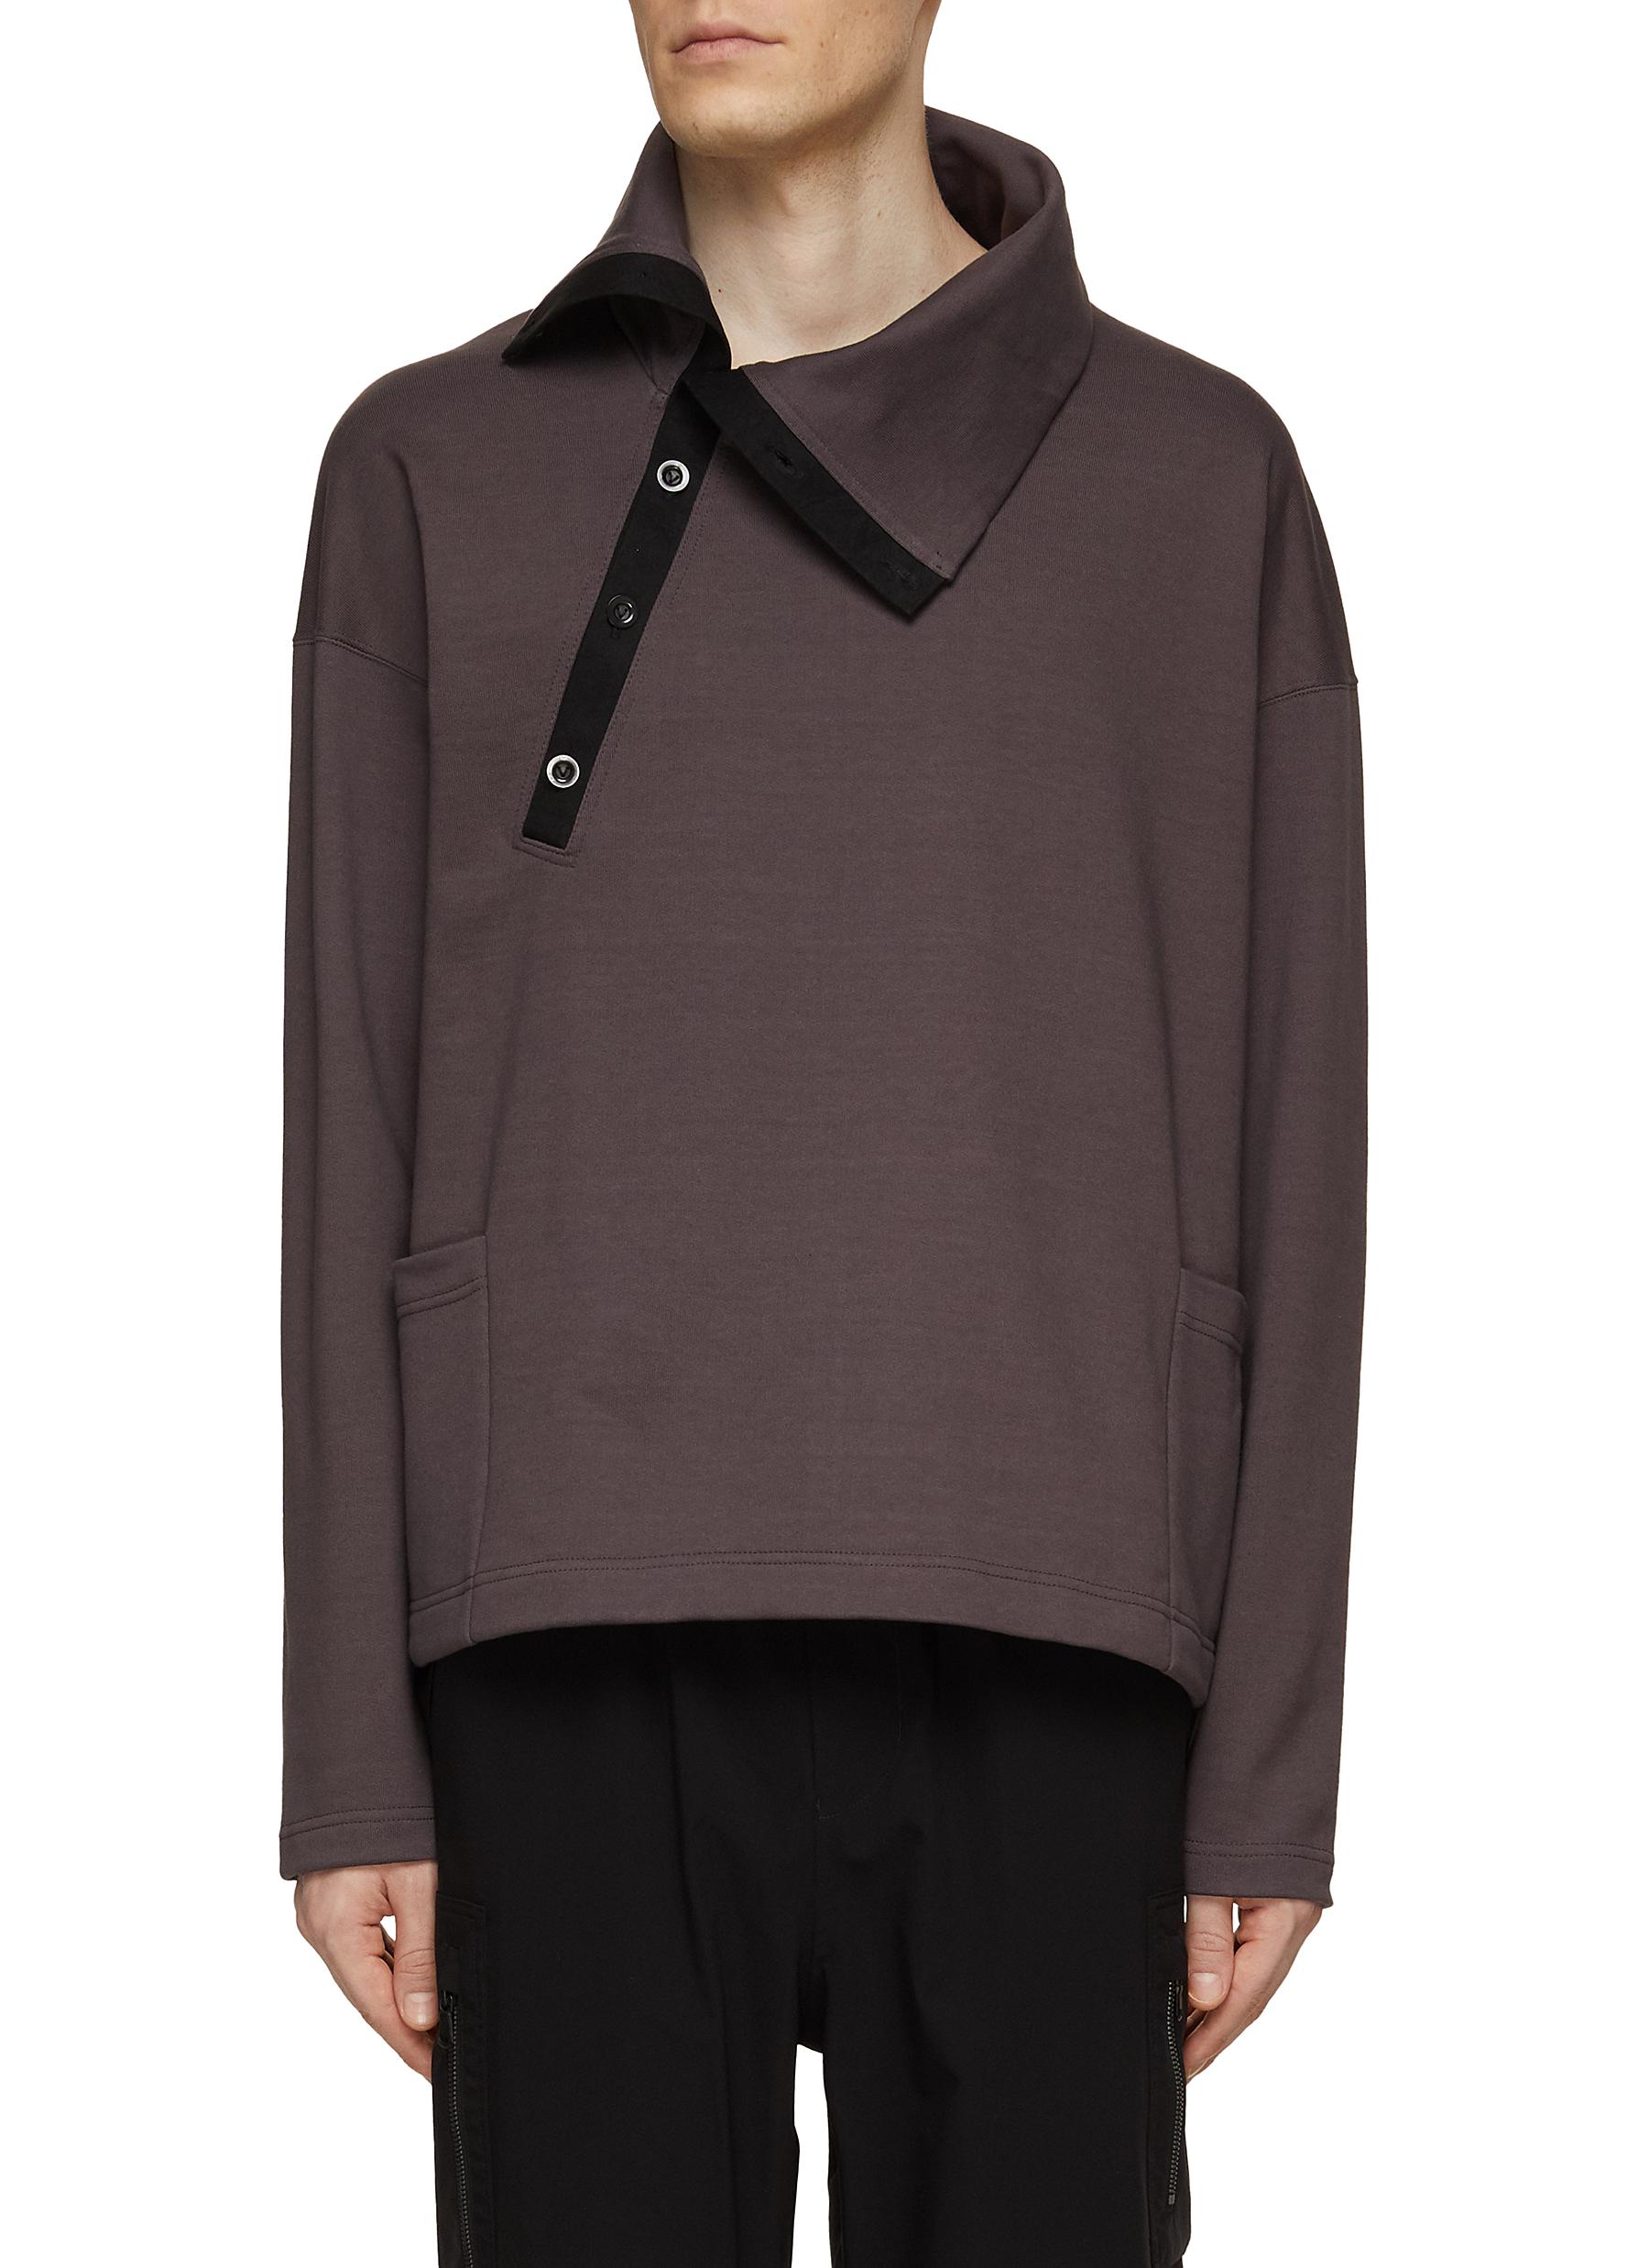 Asymmetrical Stand Collar Sweatshirt